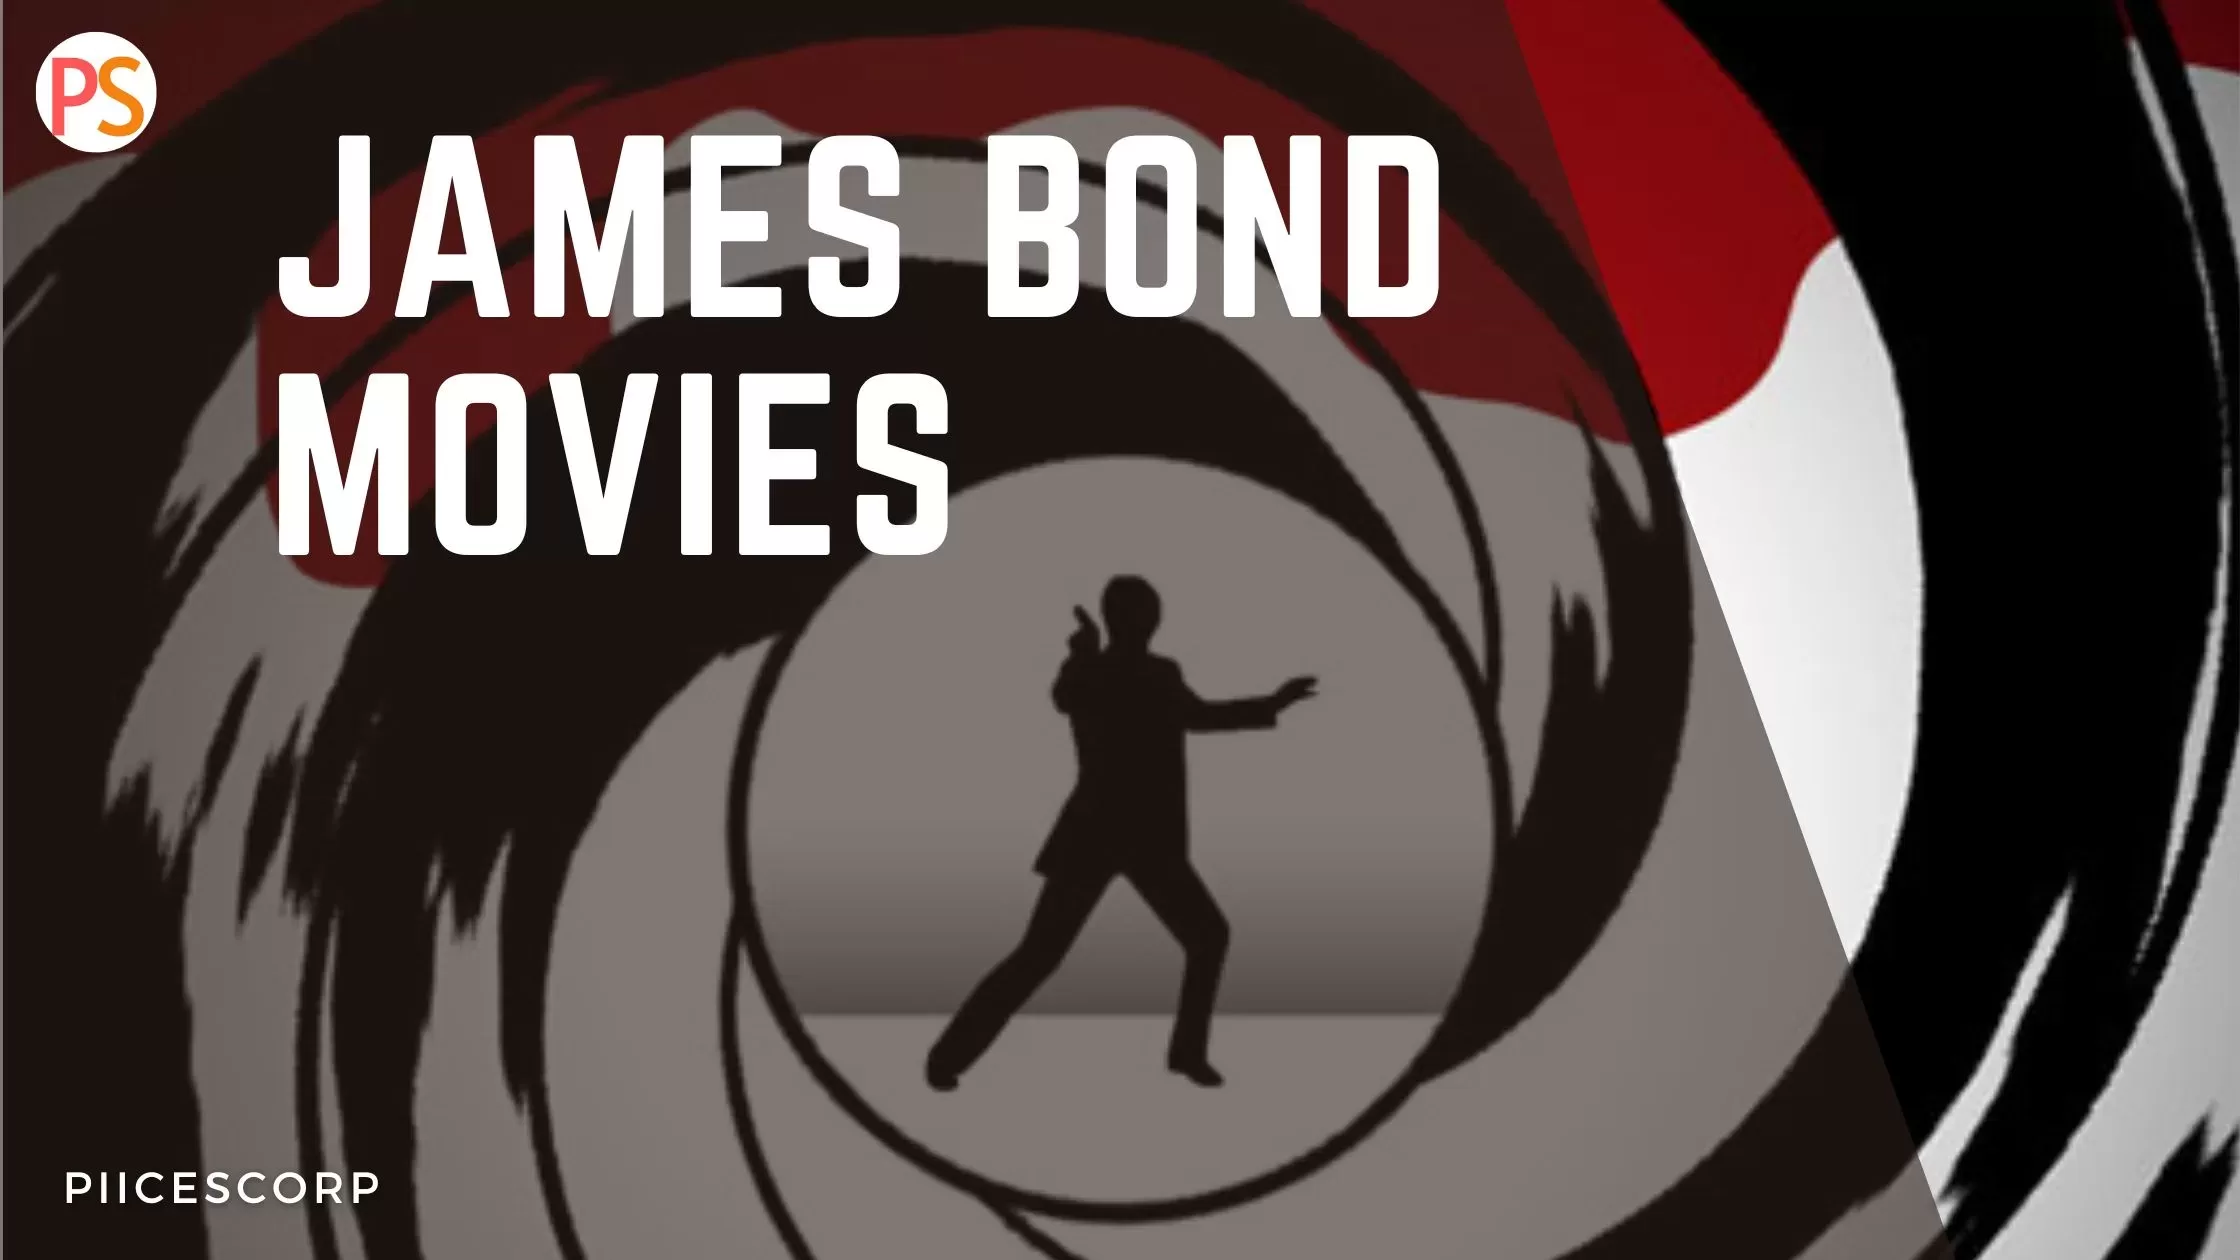 James Bond Movies: A Spy Adventure Through the Years!